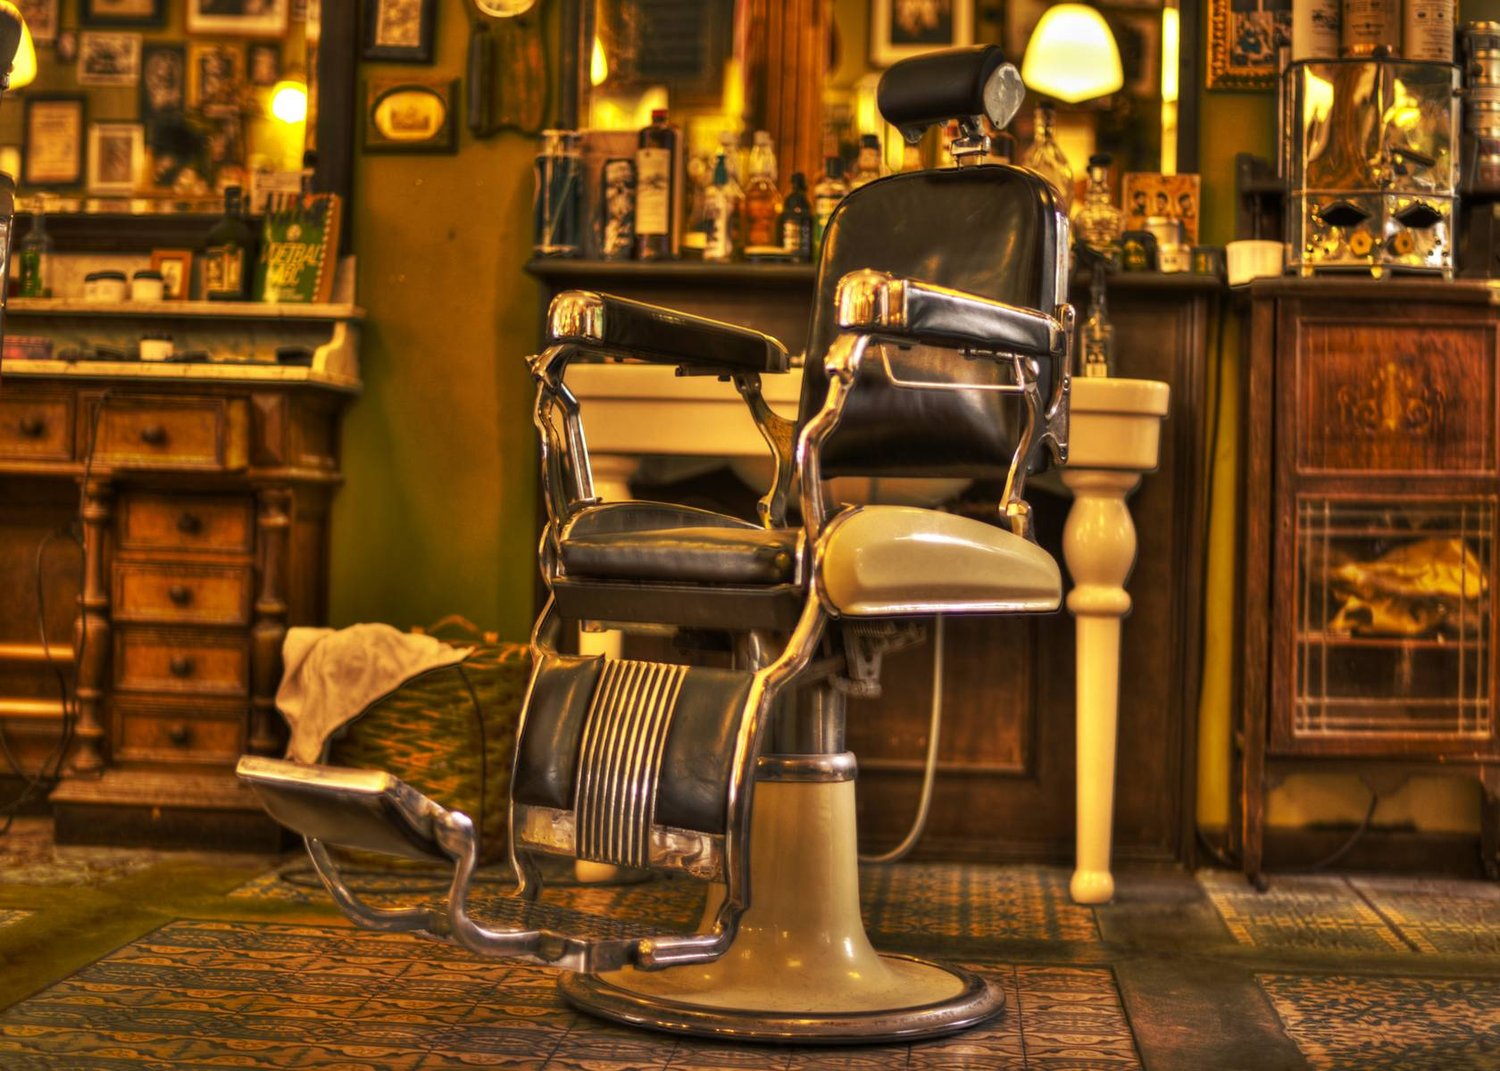 Cadeira Barbeiro Status Antiga